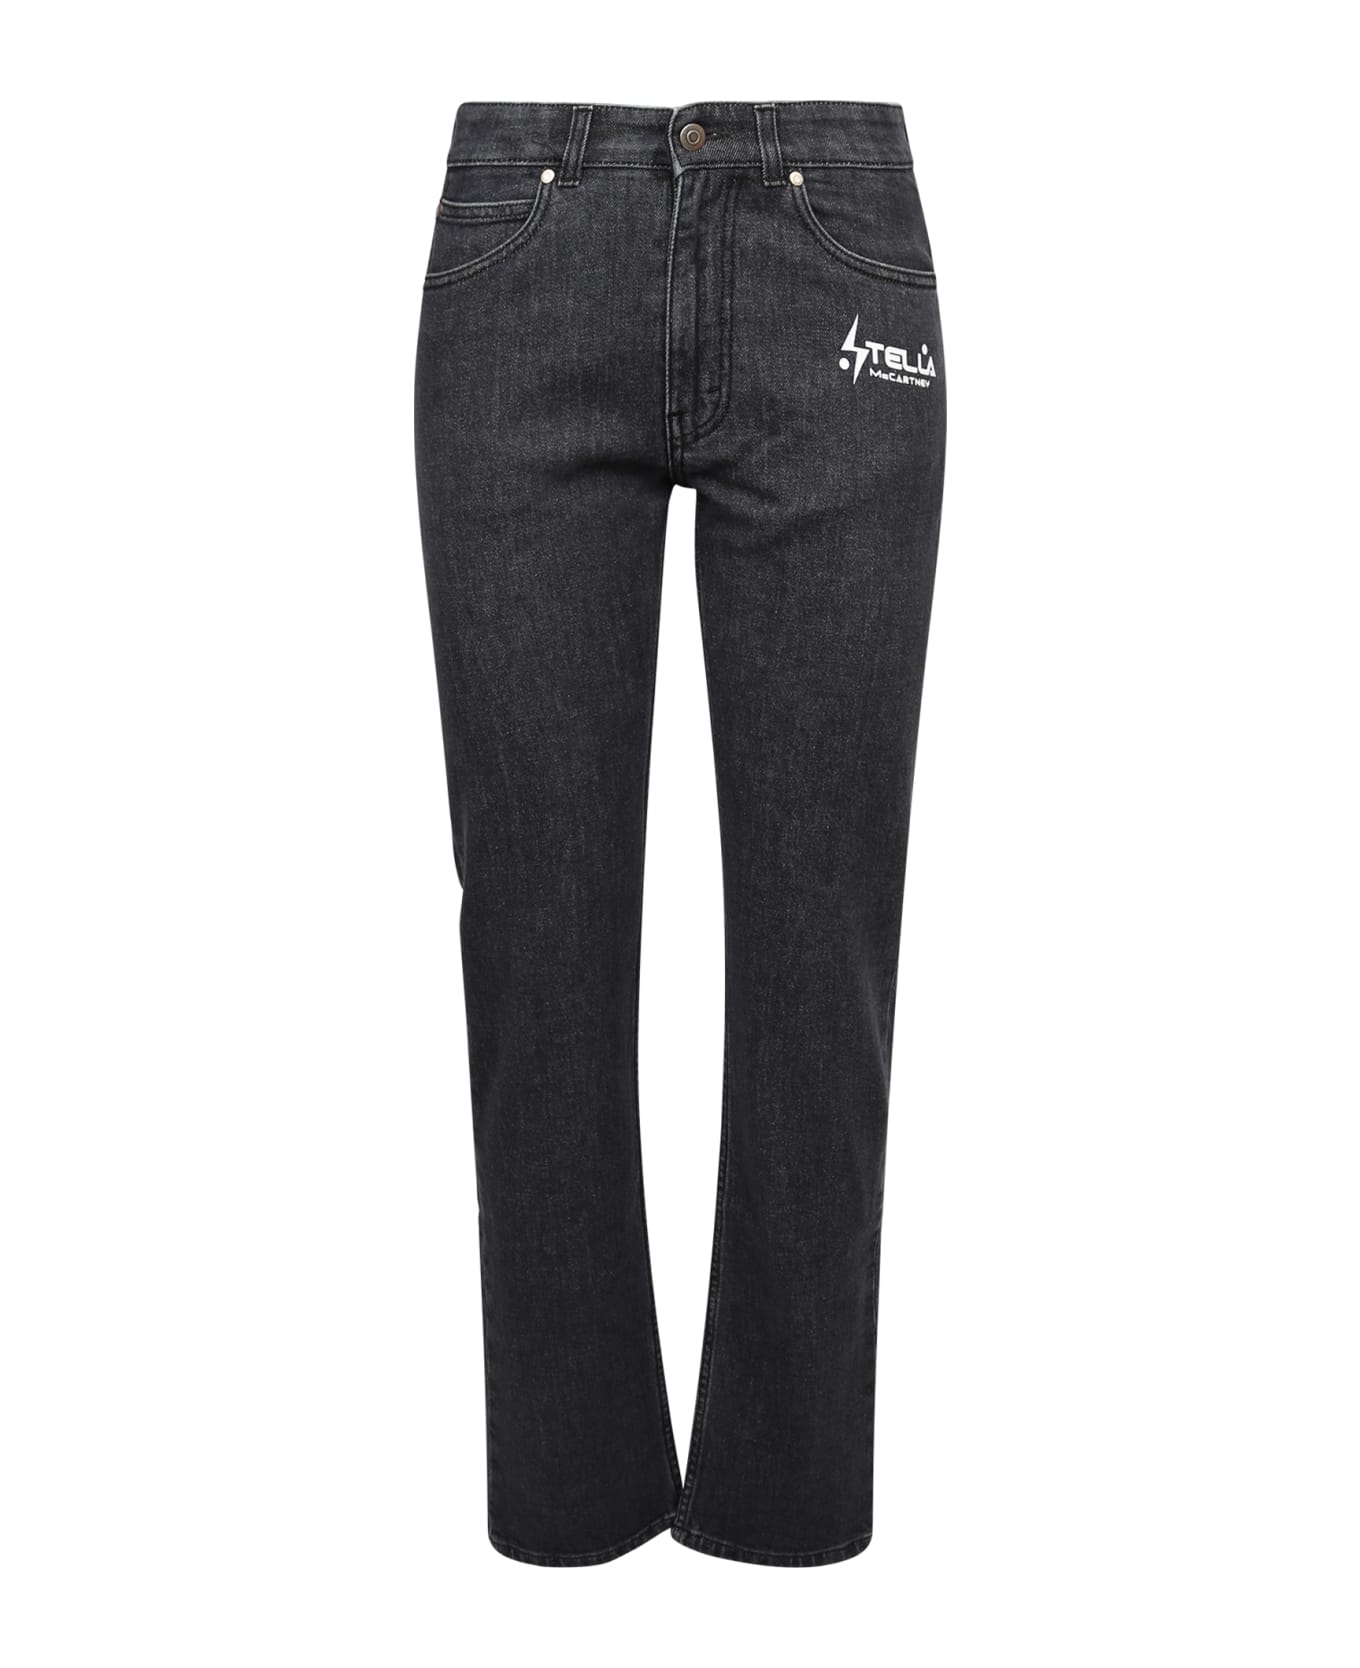 Stella McCartney Jeans Vintage Denim Nero - Black デニム